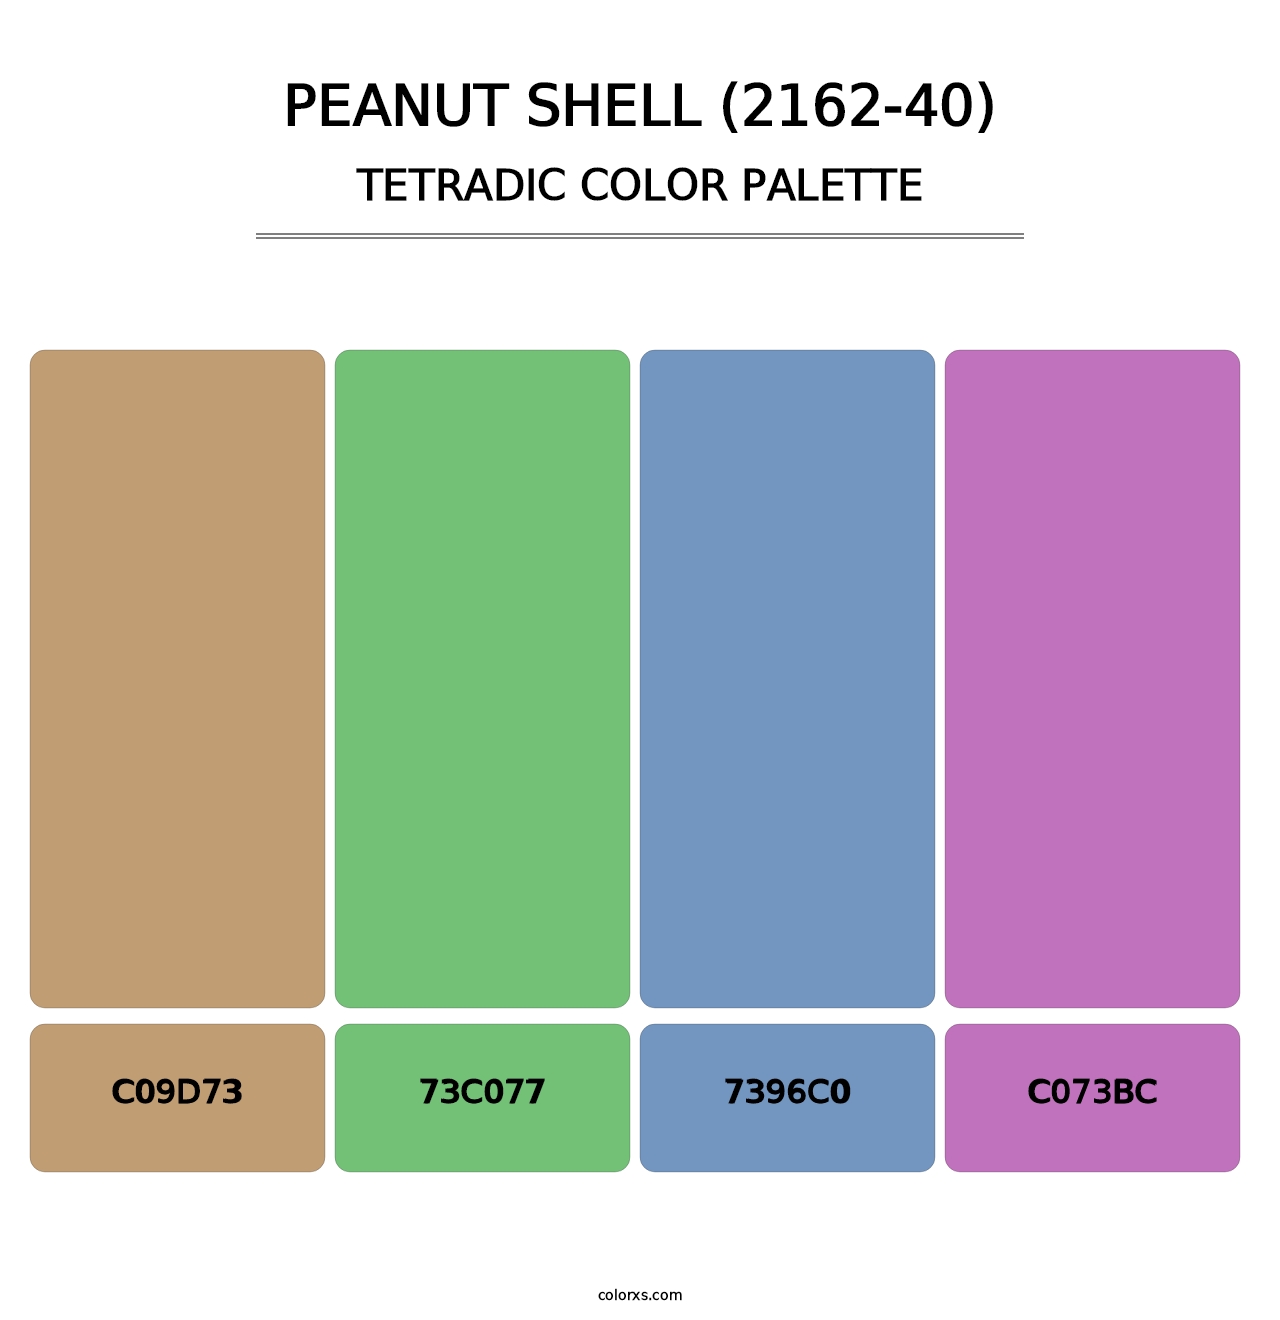 Peanut Shell (2162-40) - Tetradic Color Palette